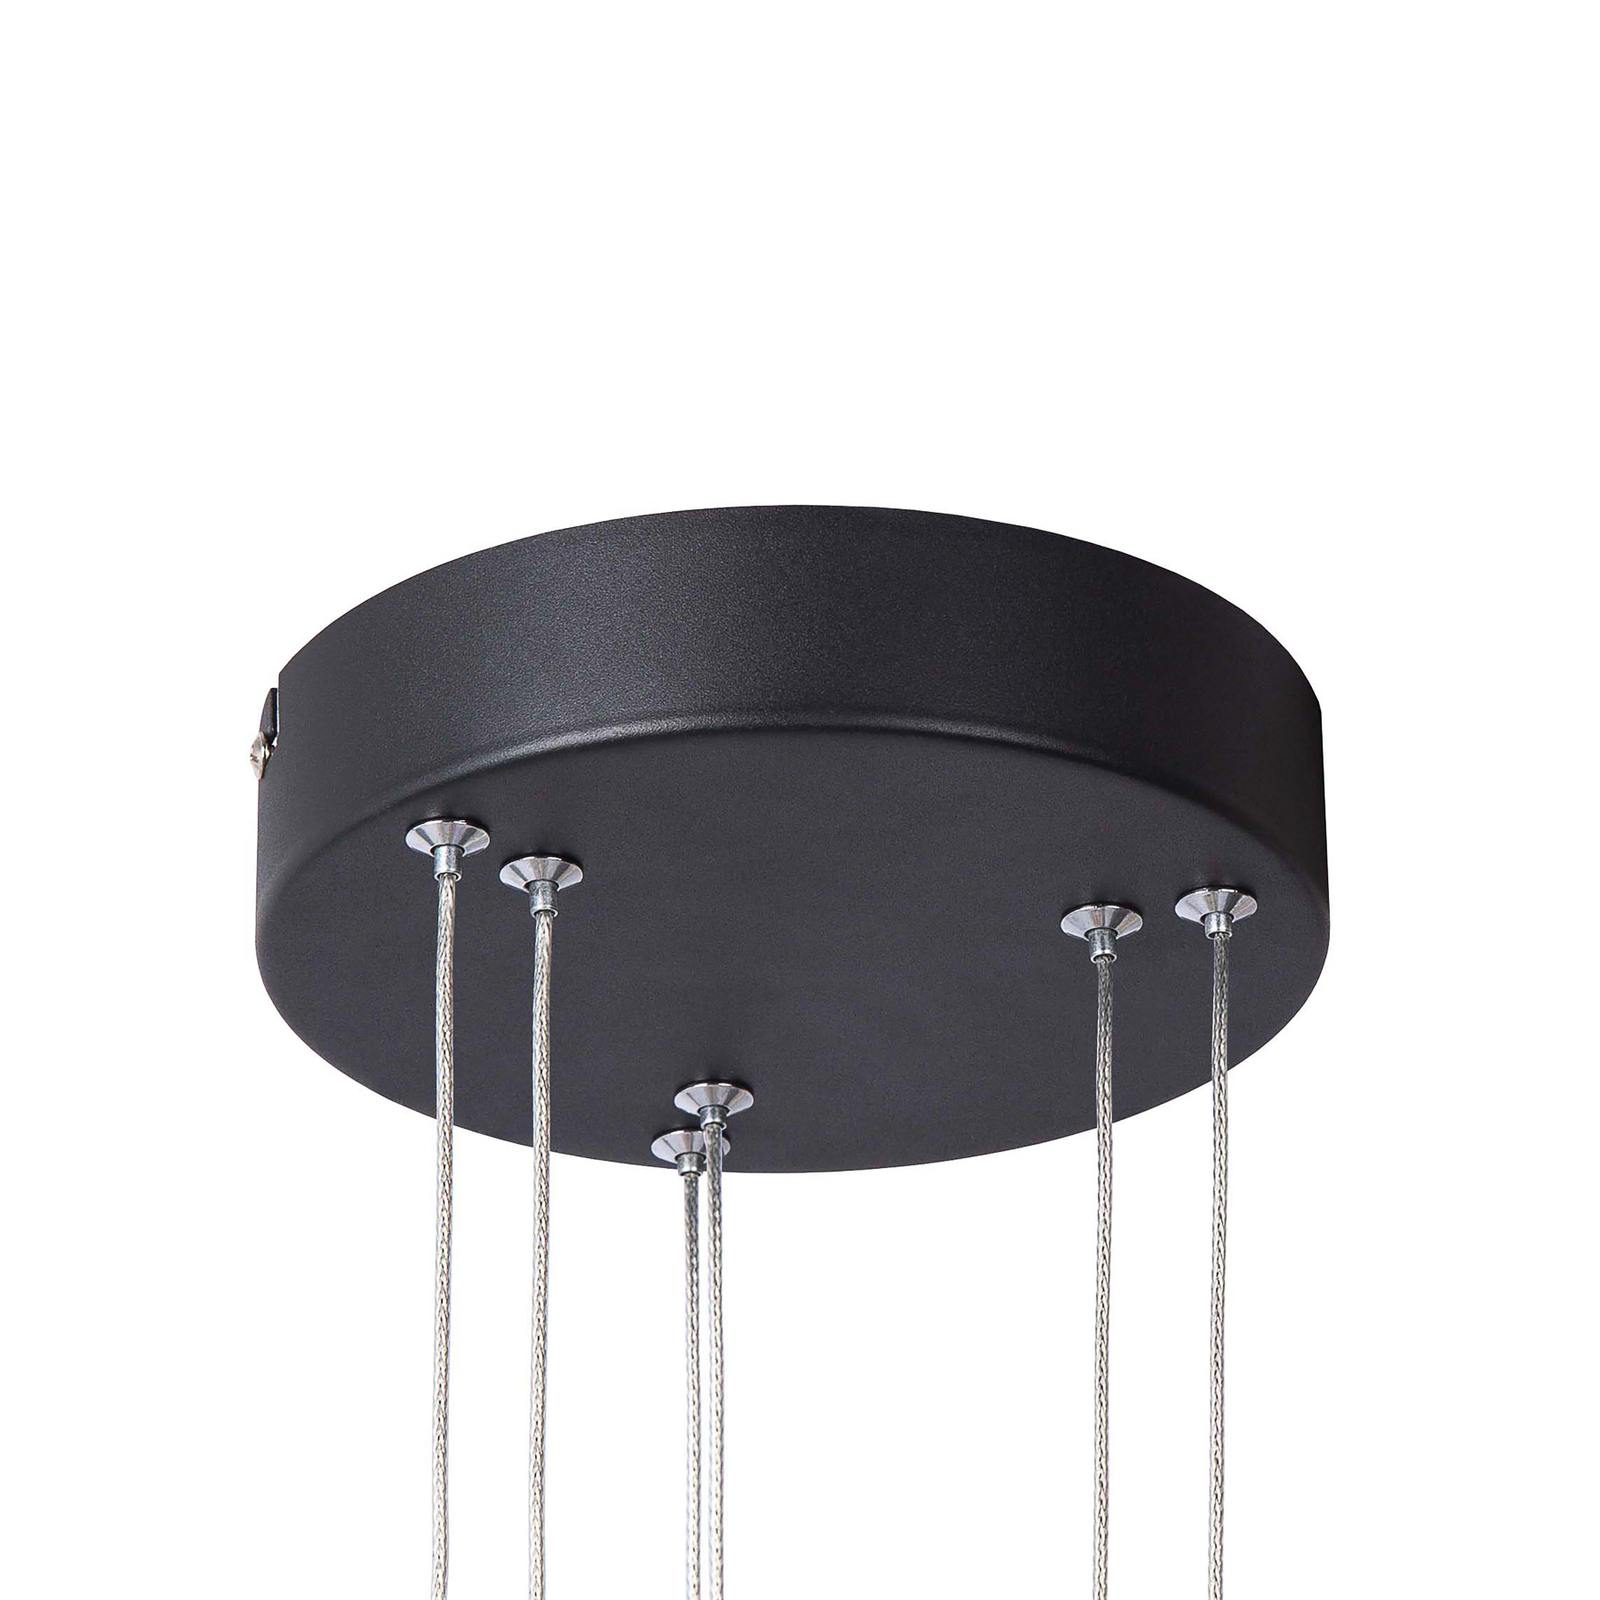 LED-Pendellampe Rilas mit Ringschirmen zweiflammig